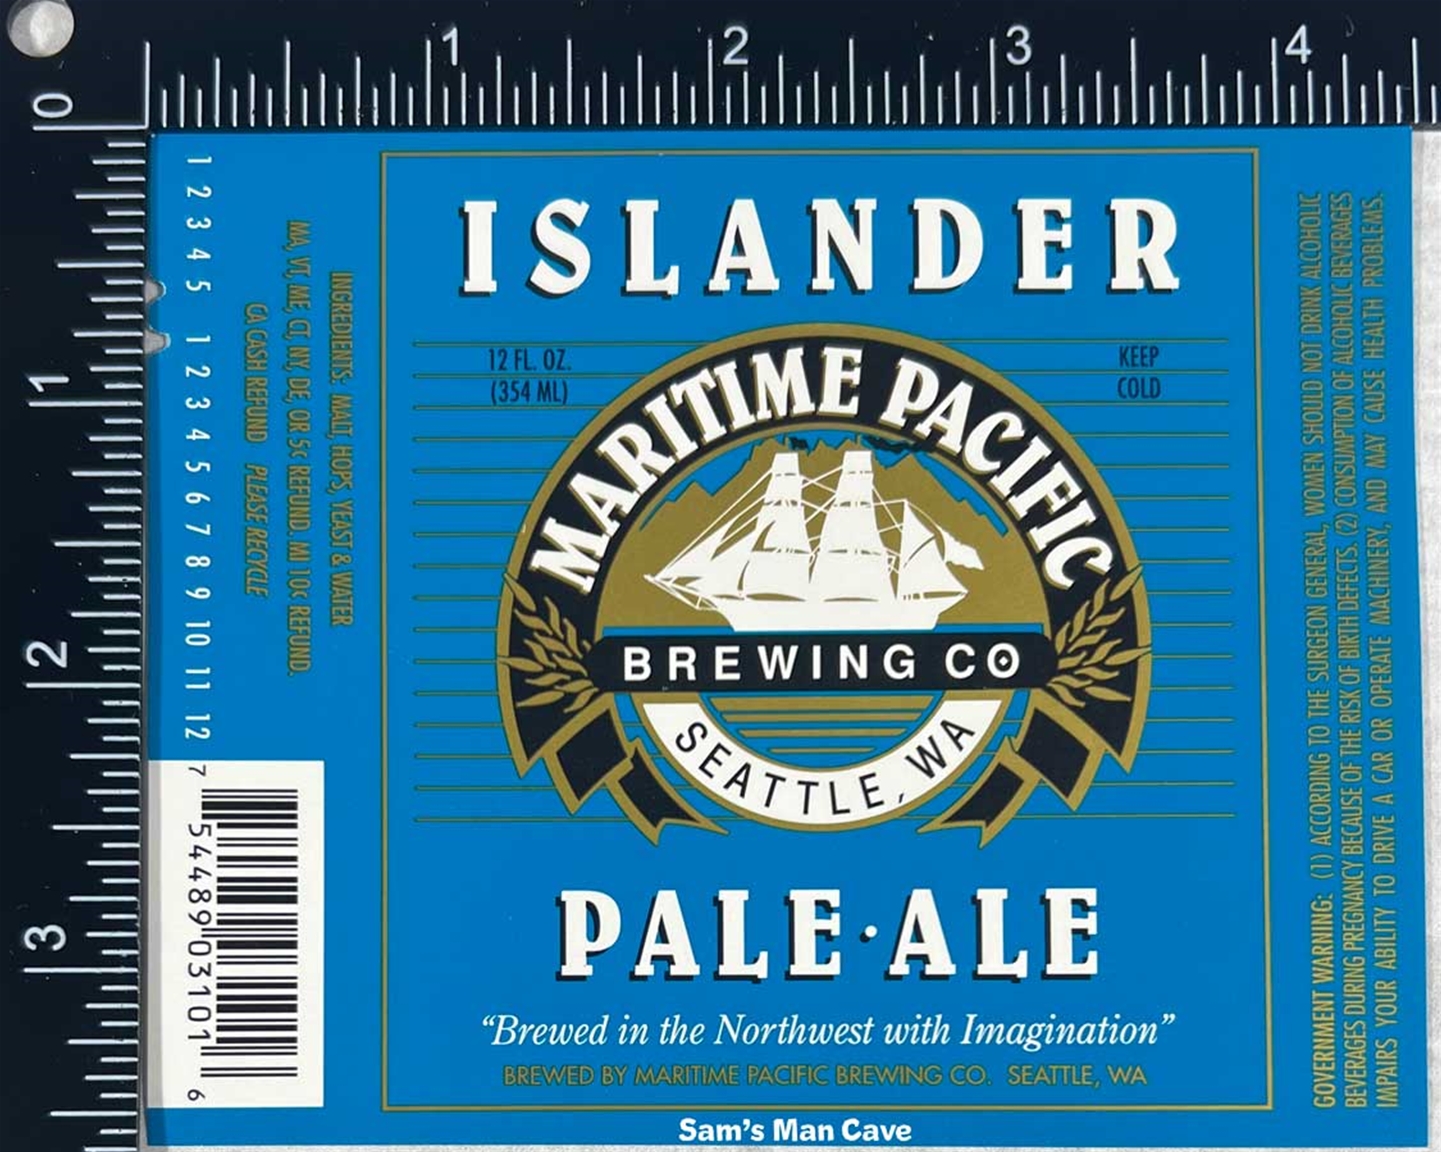 Maritime Pacific Islander Pale Ale Label